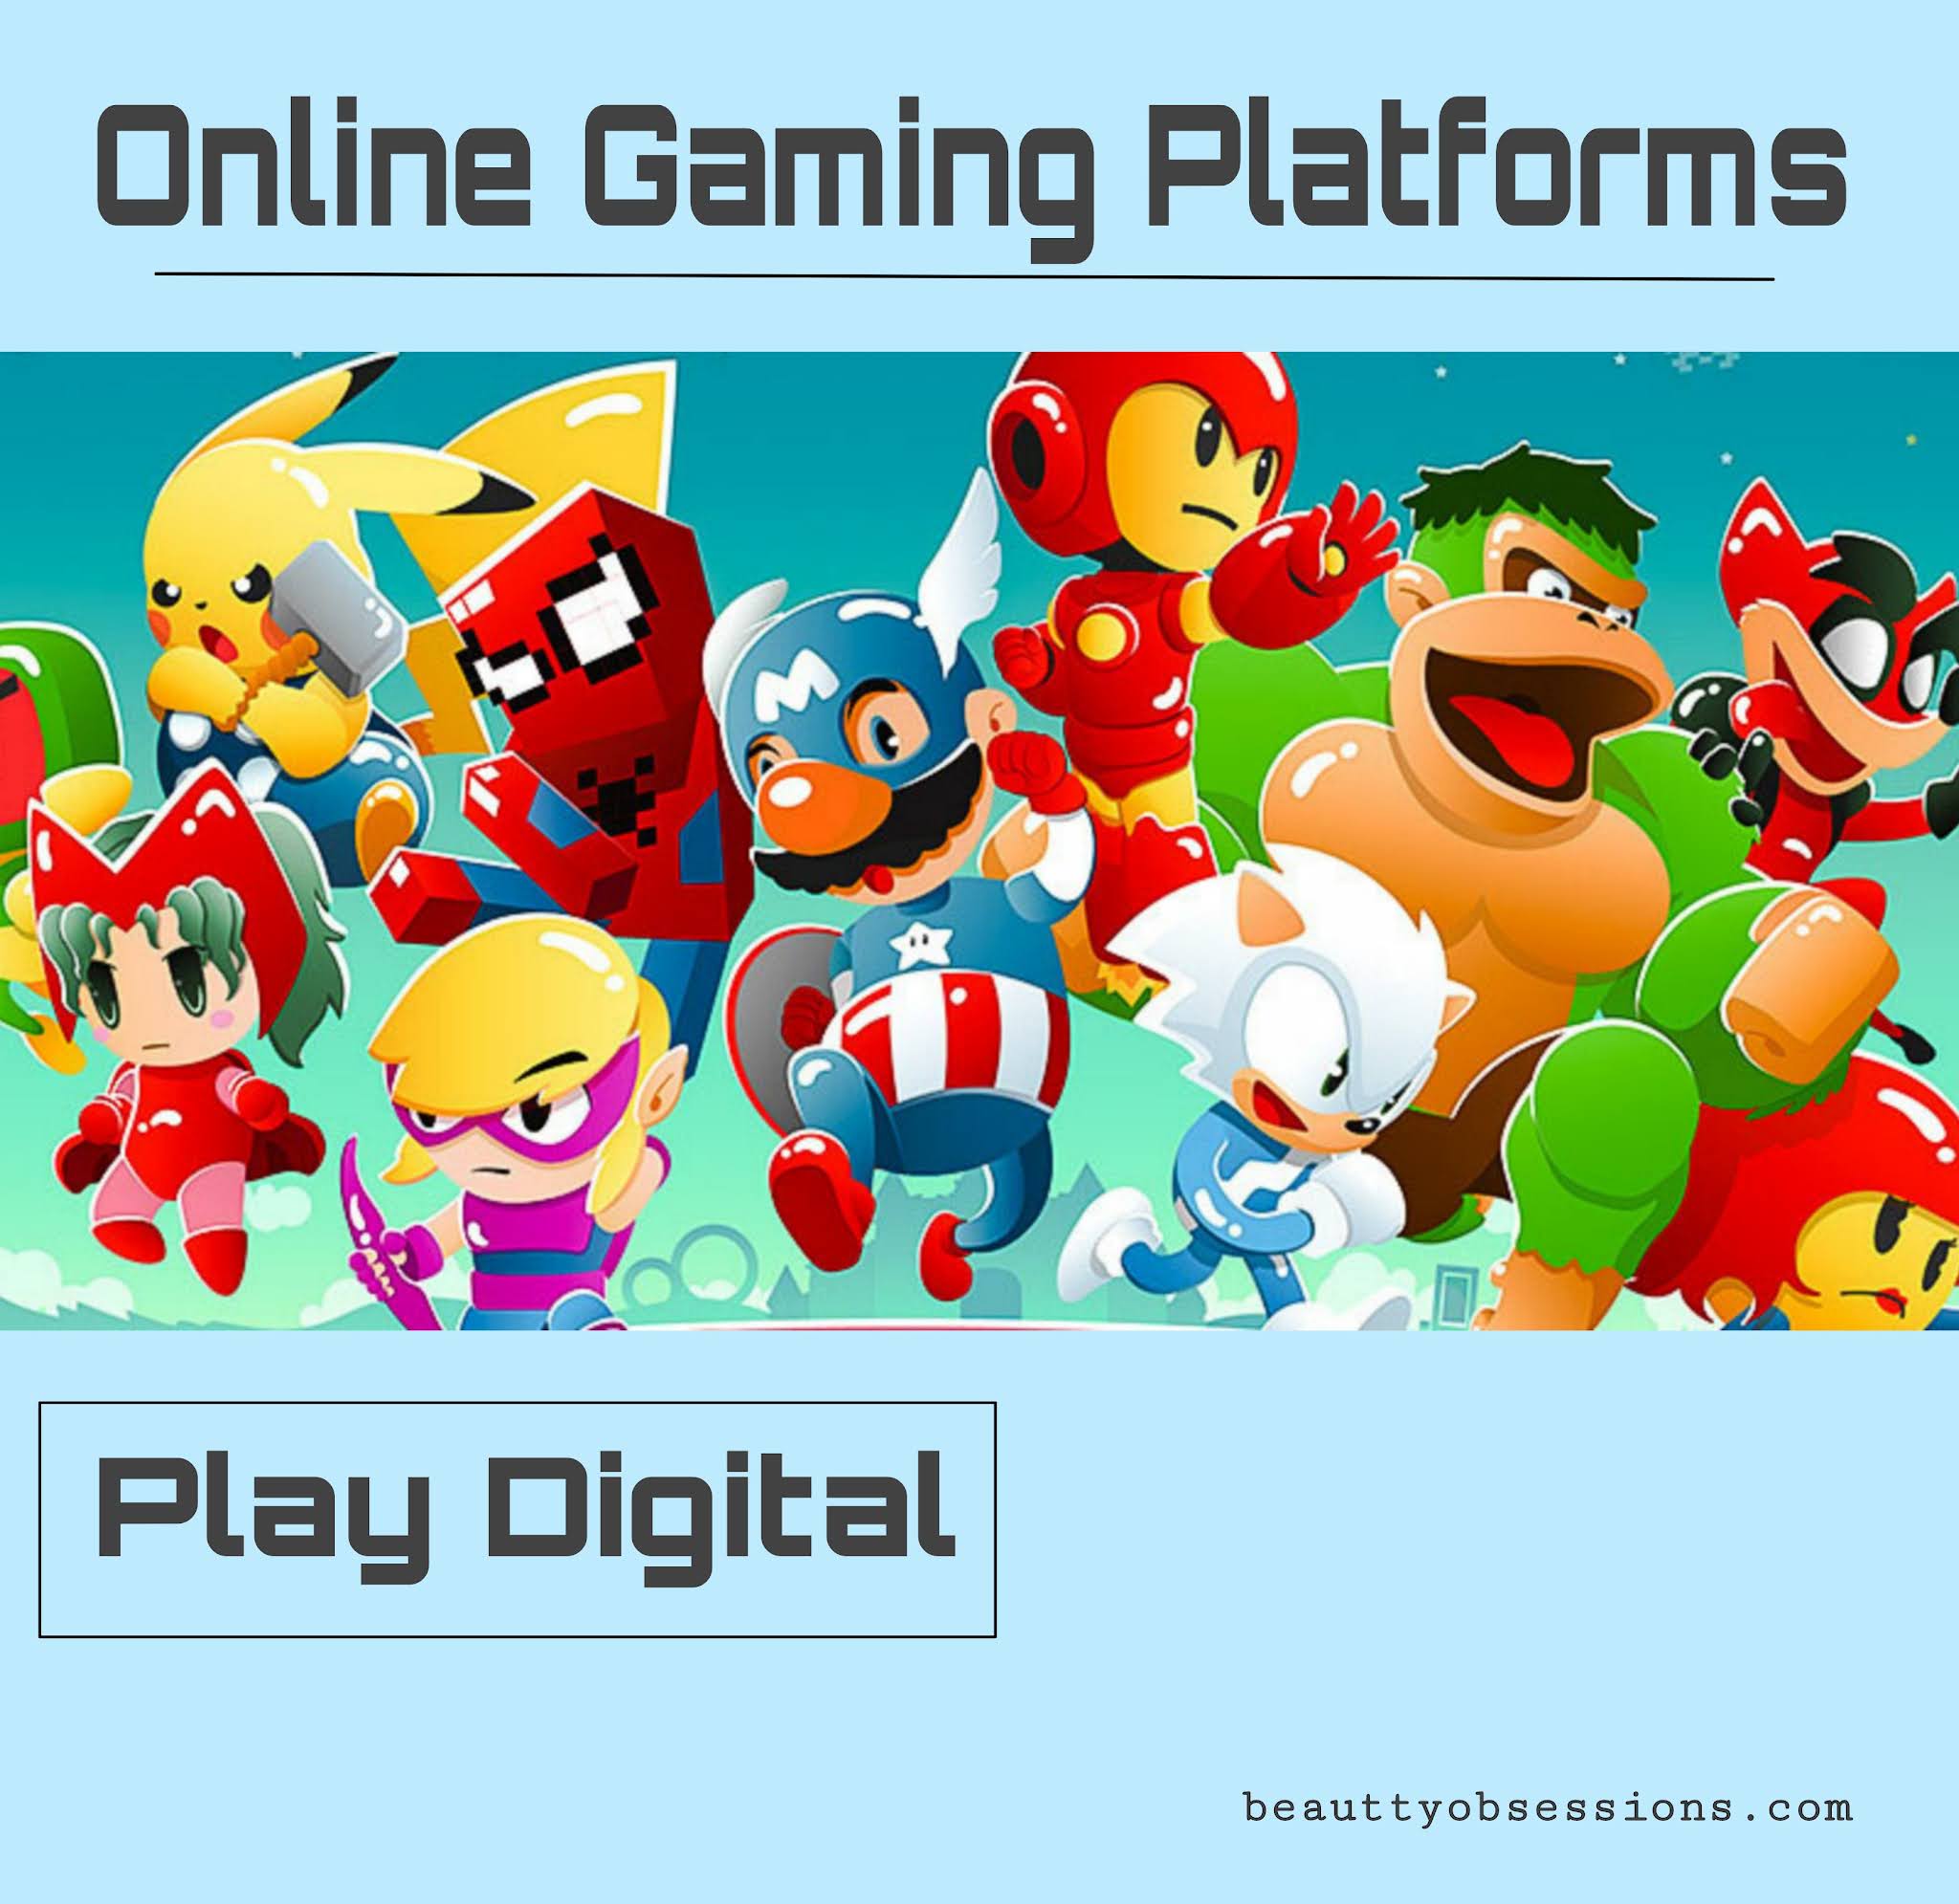 Online Gaming Platforms - Now Play Digital